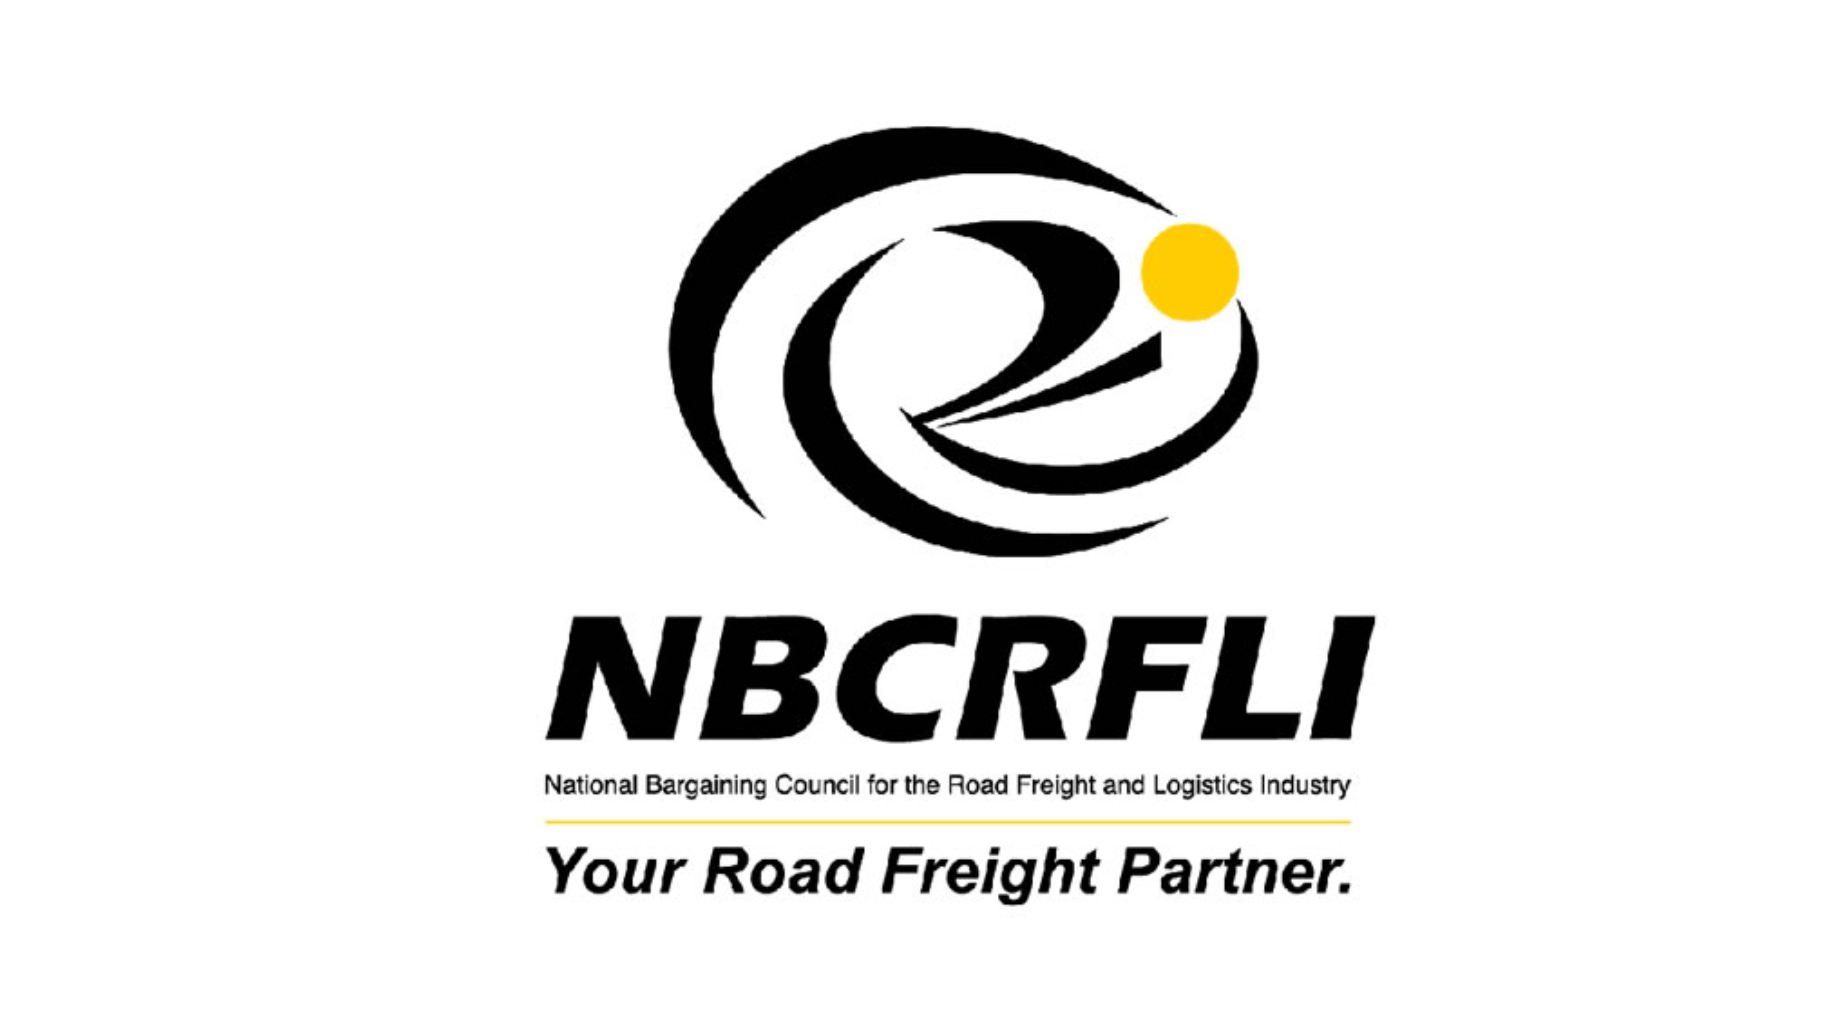 https://beyondcarriers.co.za/wp-content/uploads/2019/07/nbcrfli-logo.jpg